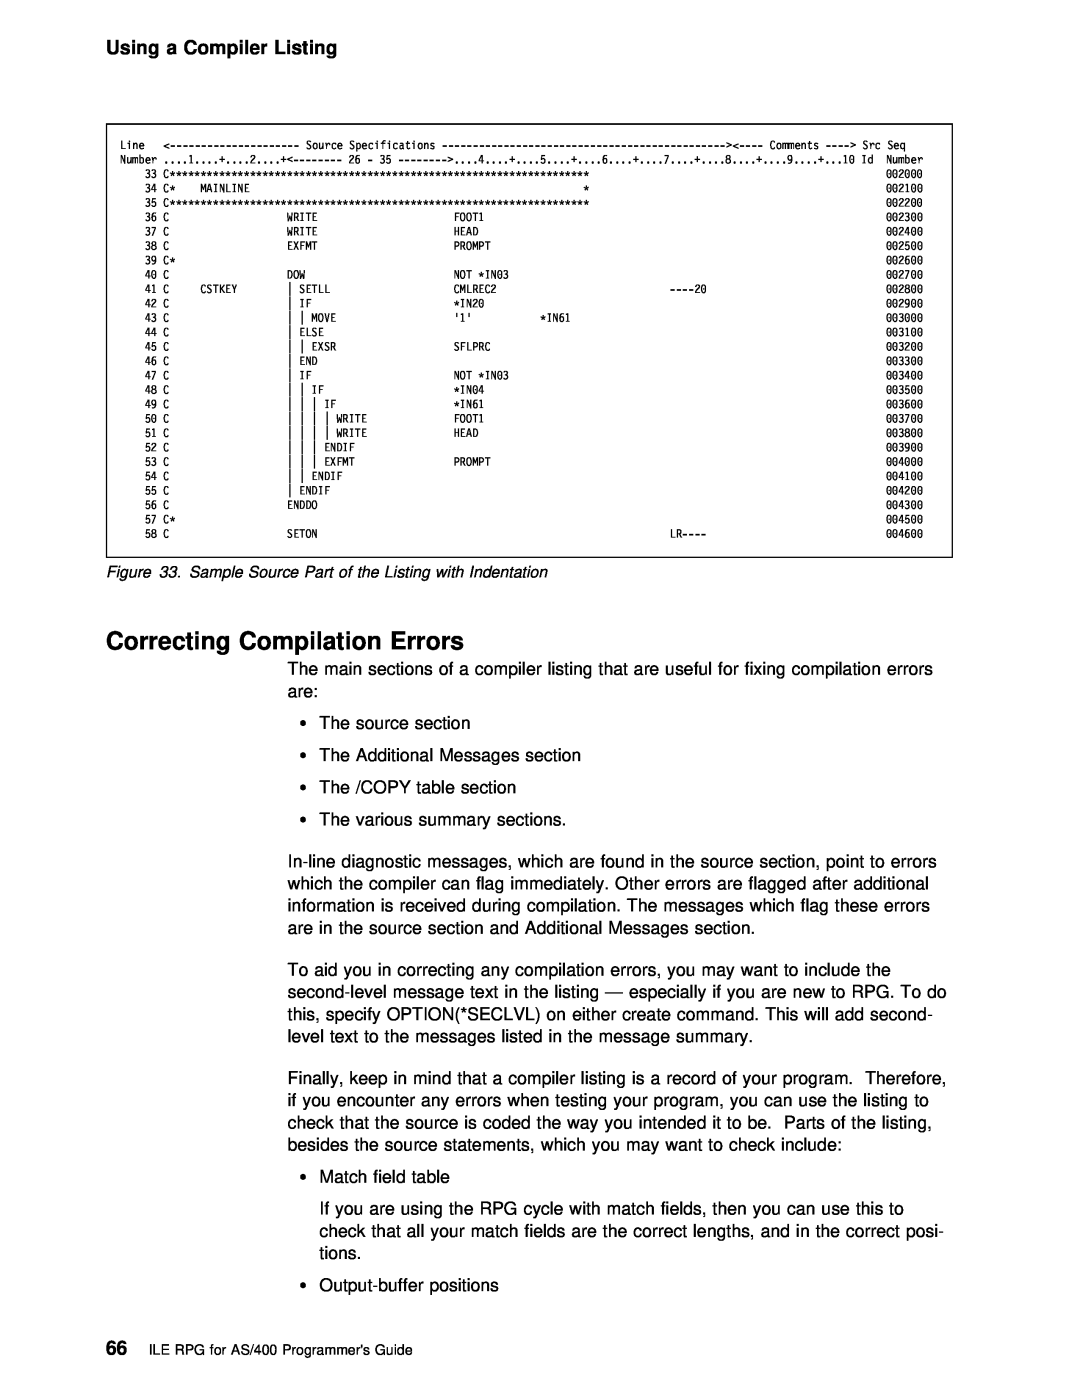 IBM AS/400 manual Errors, Listing, Compilation, Using 